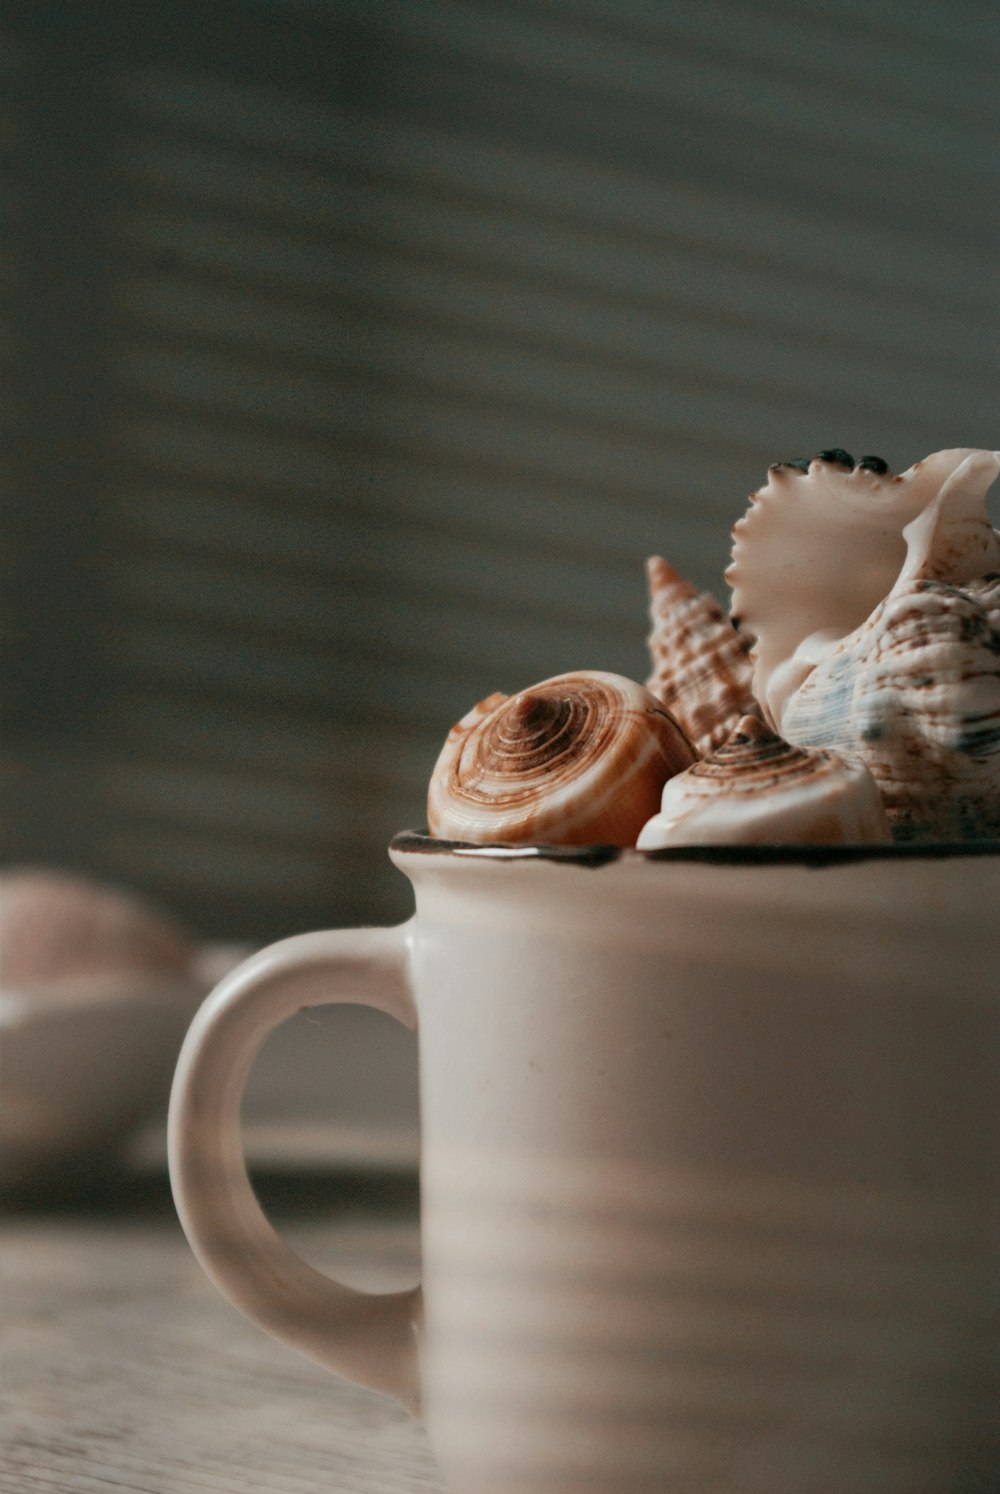 white ceramic mug with brown and white seashell